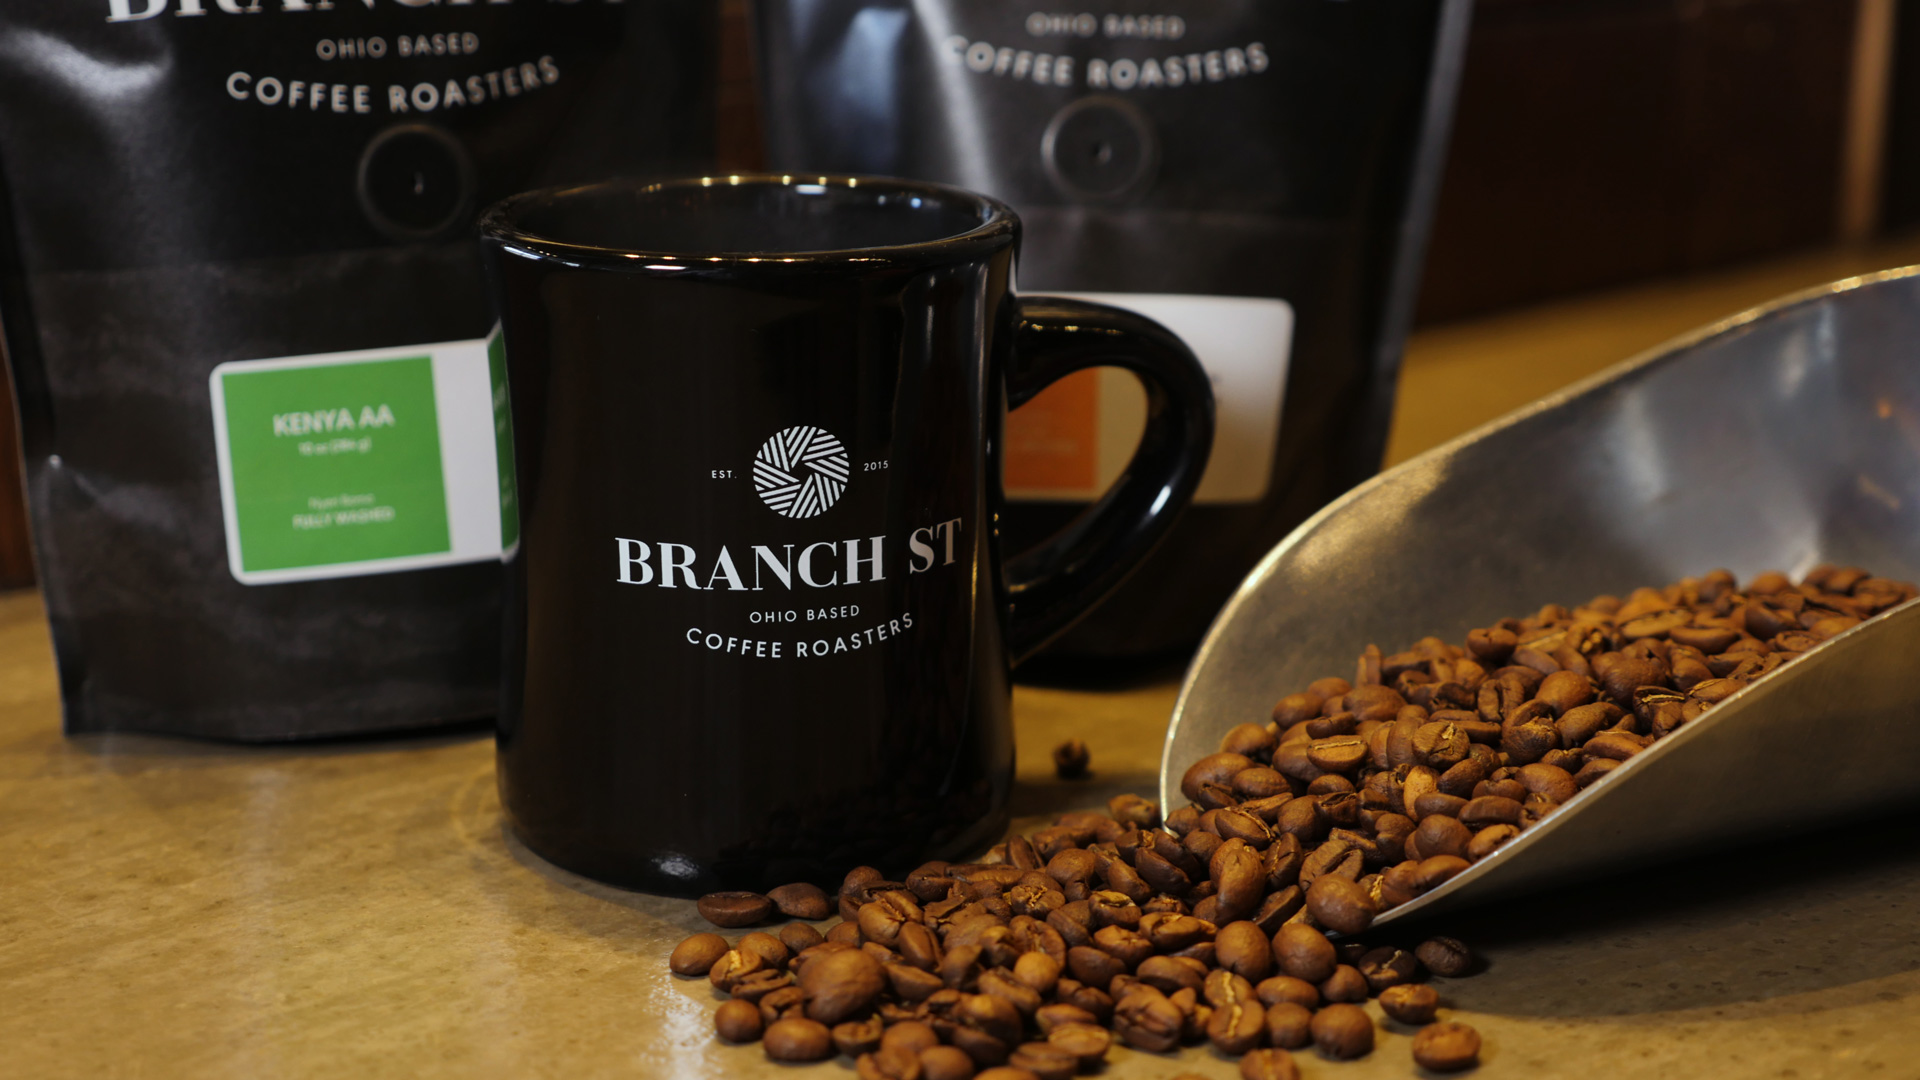 Branch Street Coffee Roasters